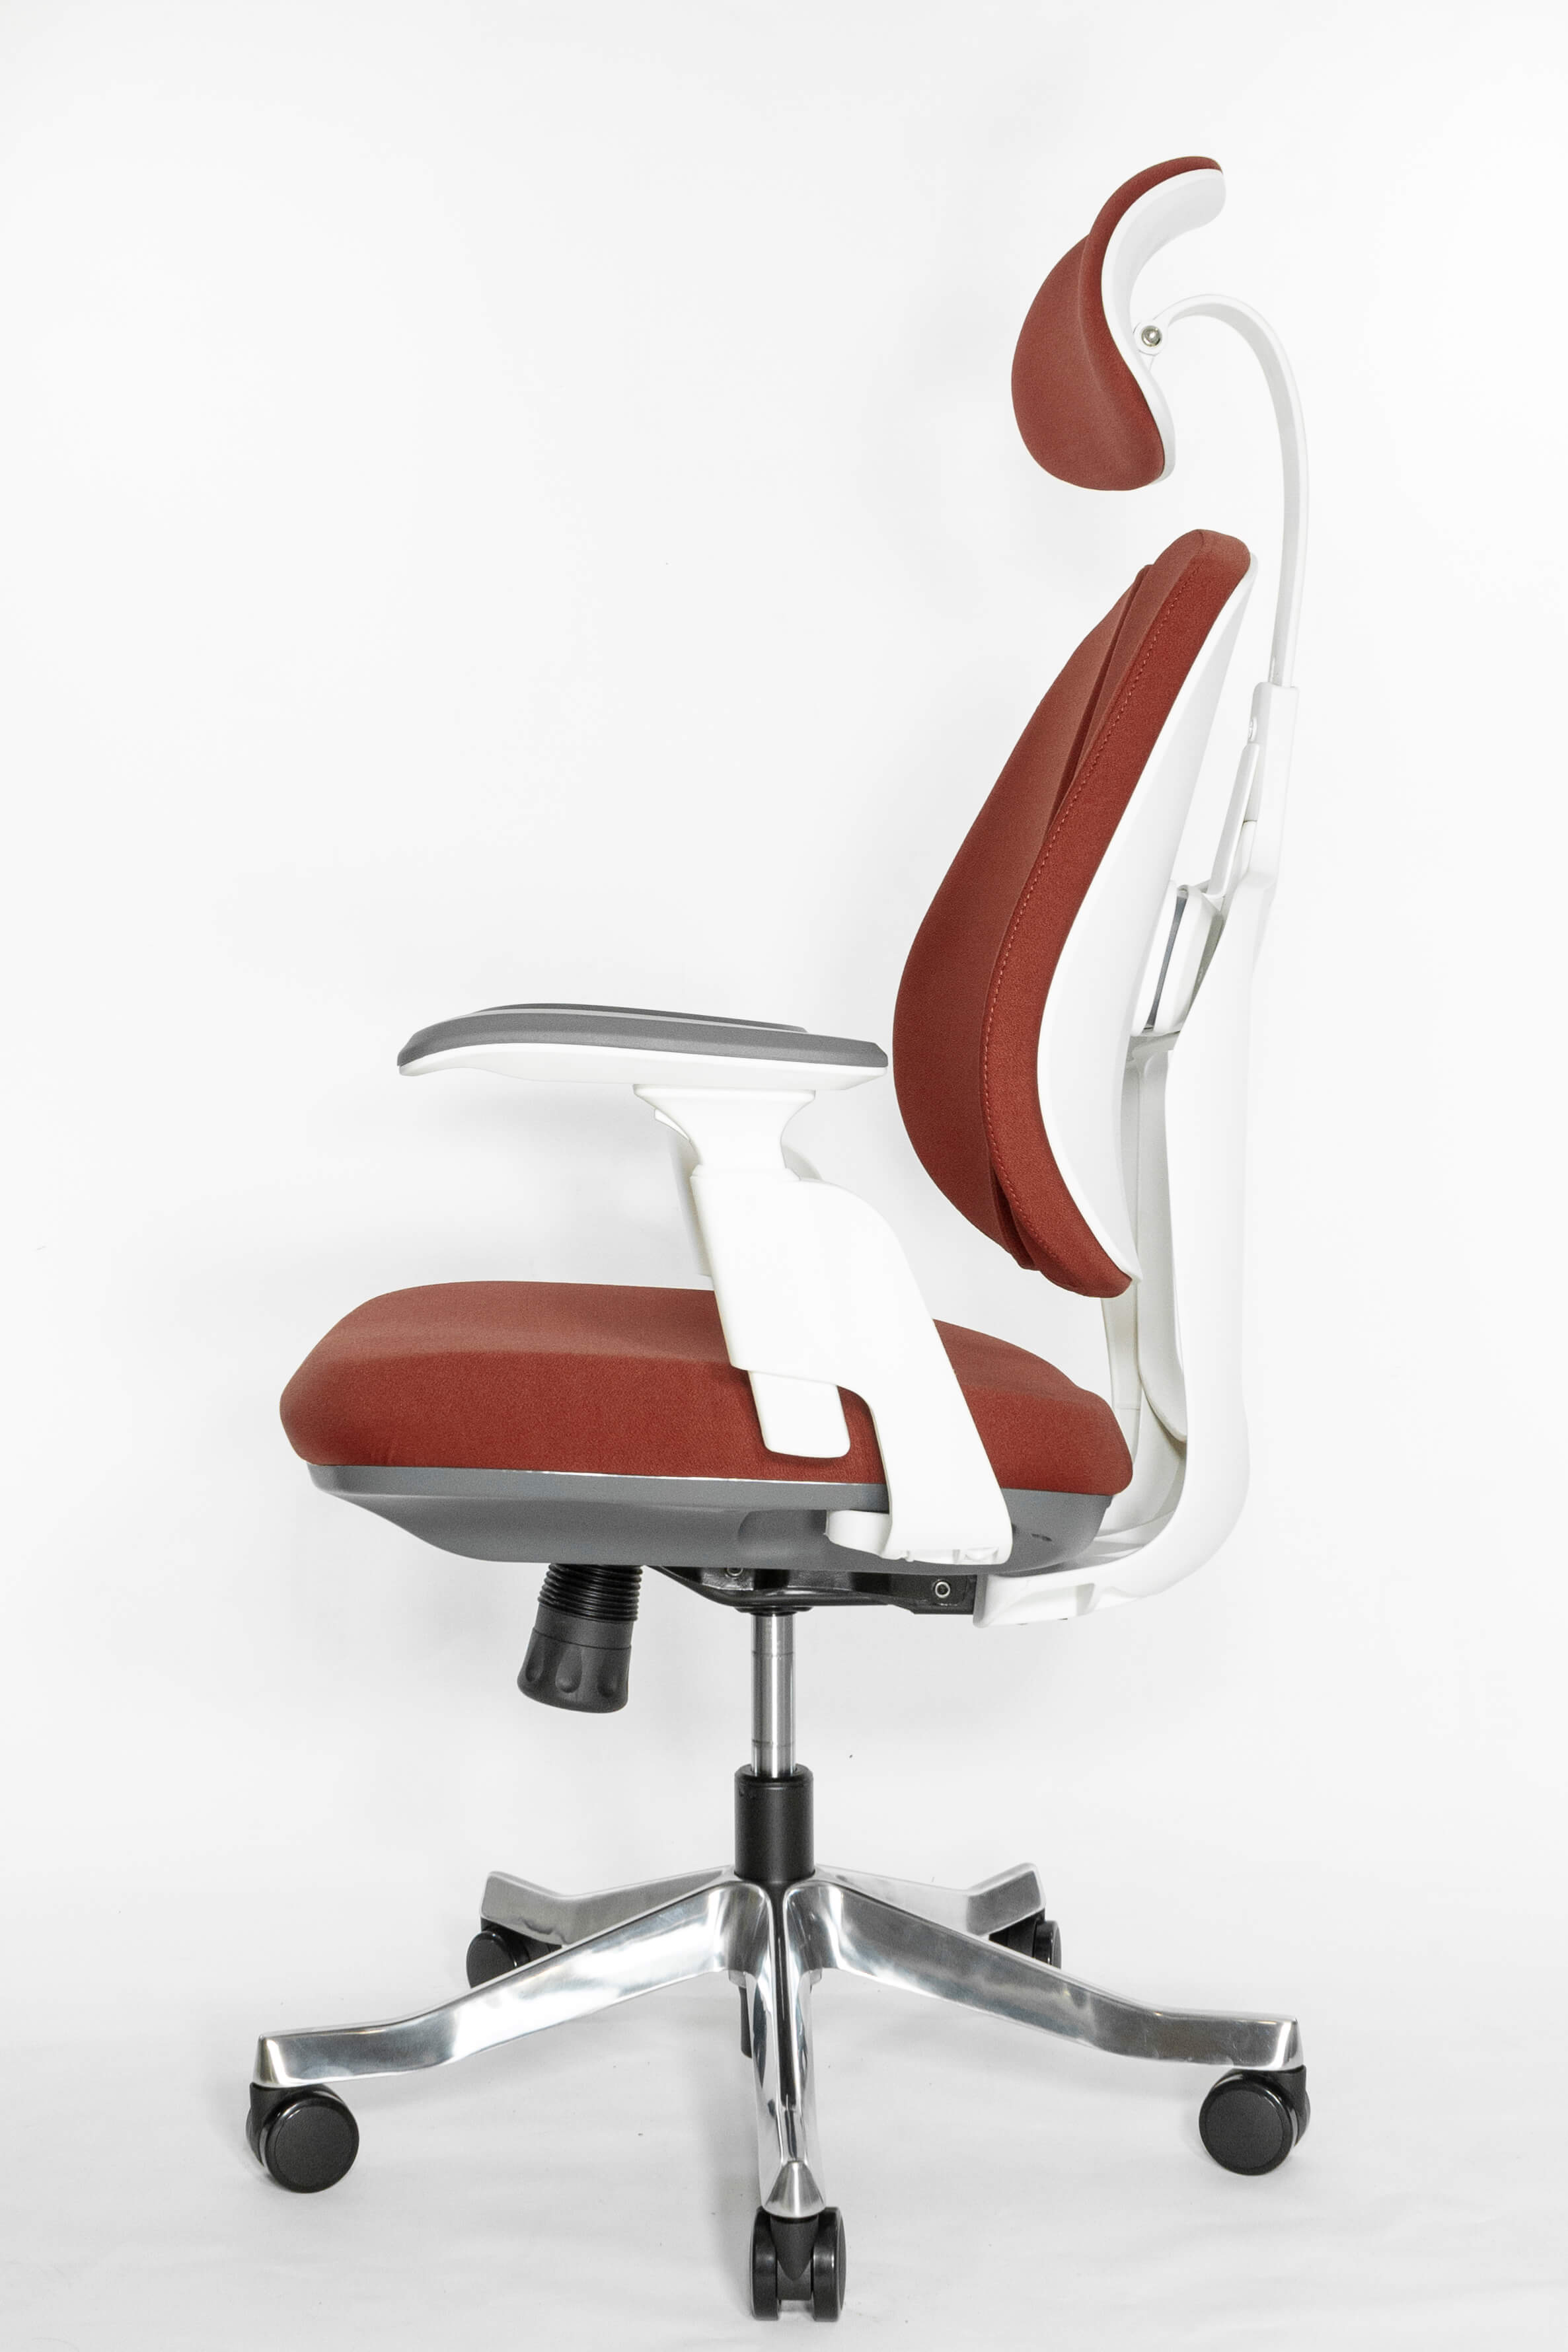 Ортопедическое кресло Falto ORTO-BIONIC A92-2W Fabrik-WH-RED (каркас светлый / ткань RED)